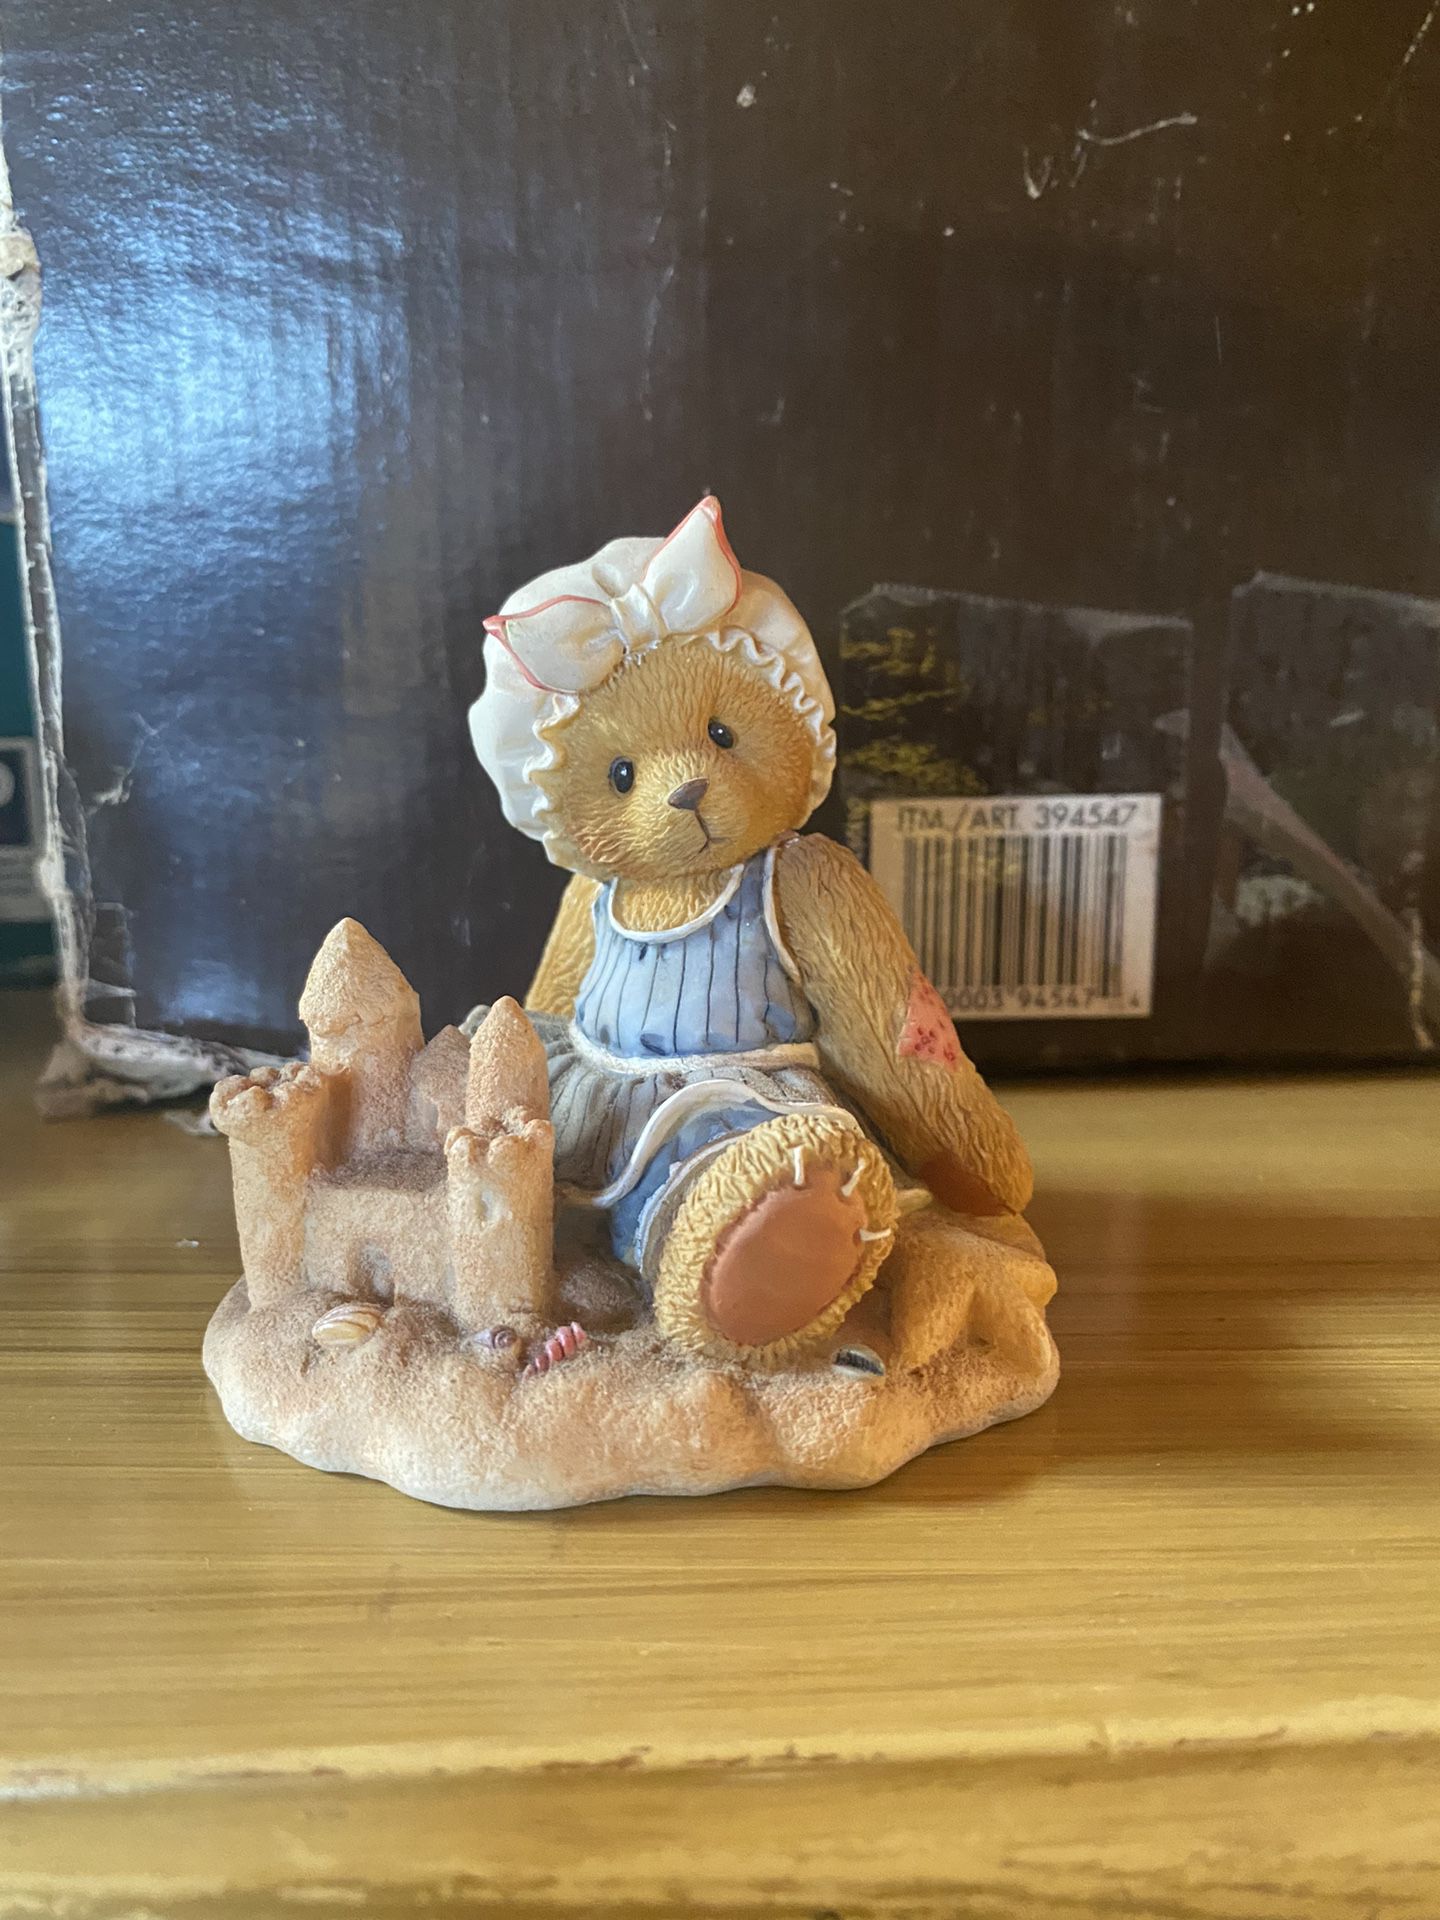 1996 Cherished Teddies Figurine "Sandy" 203467